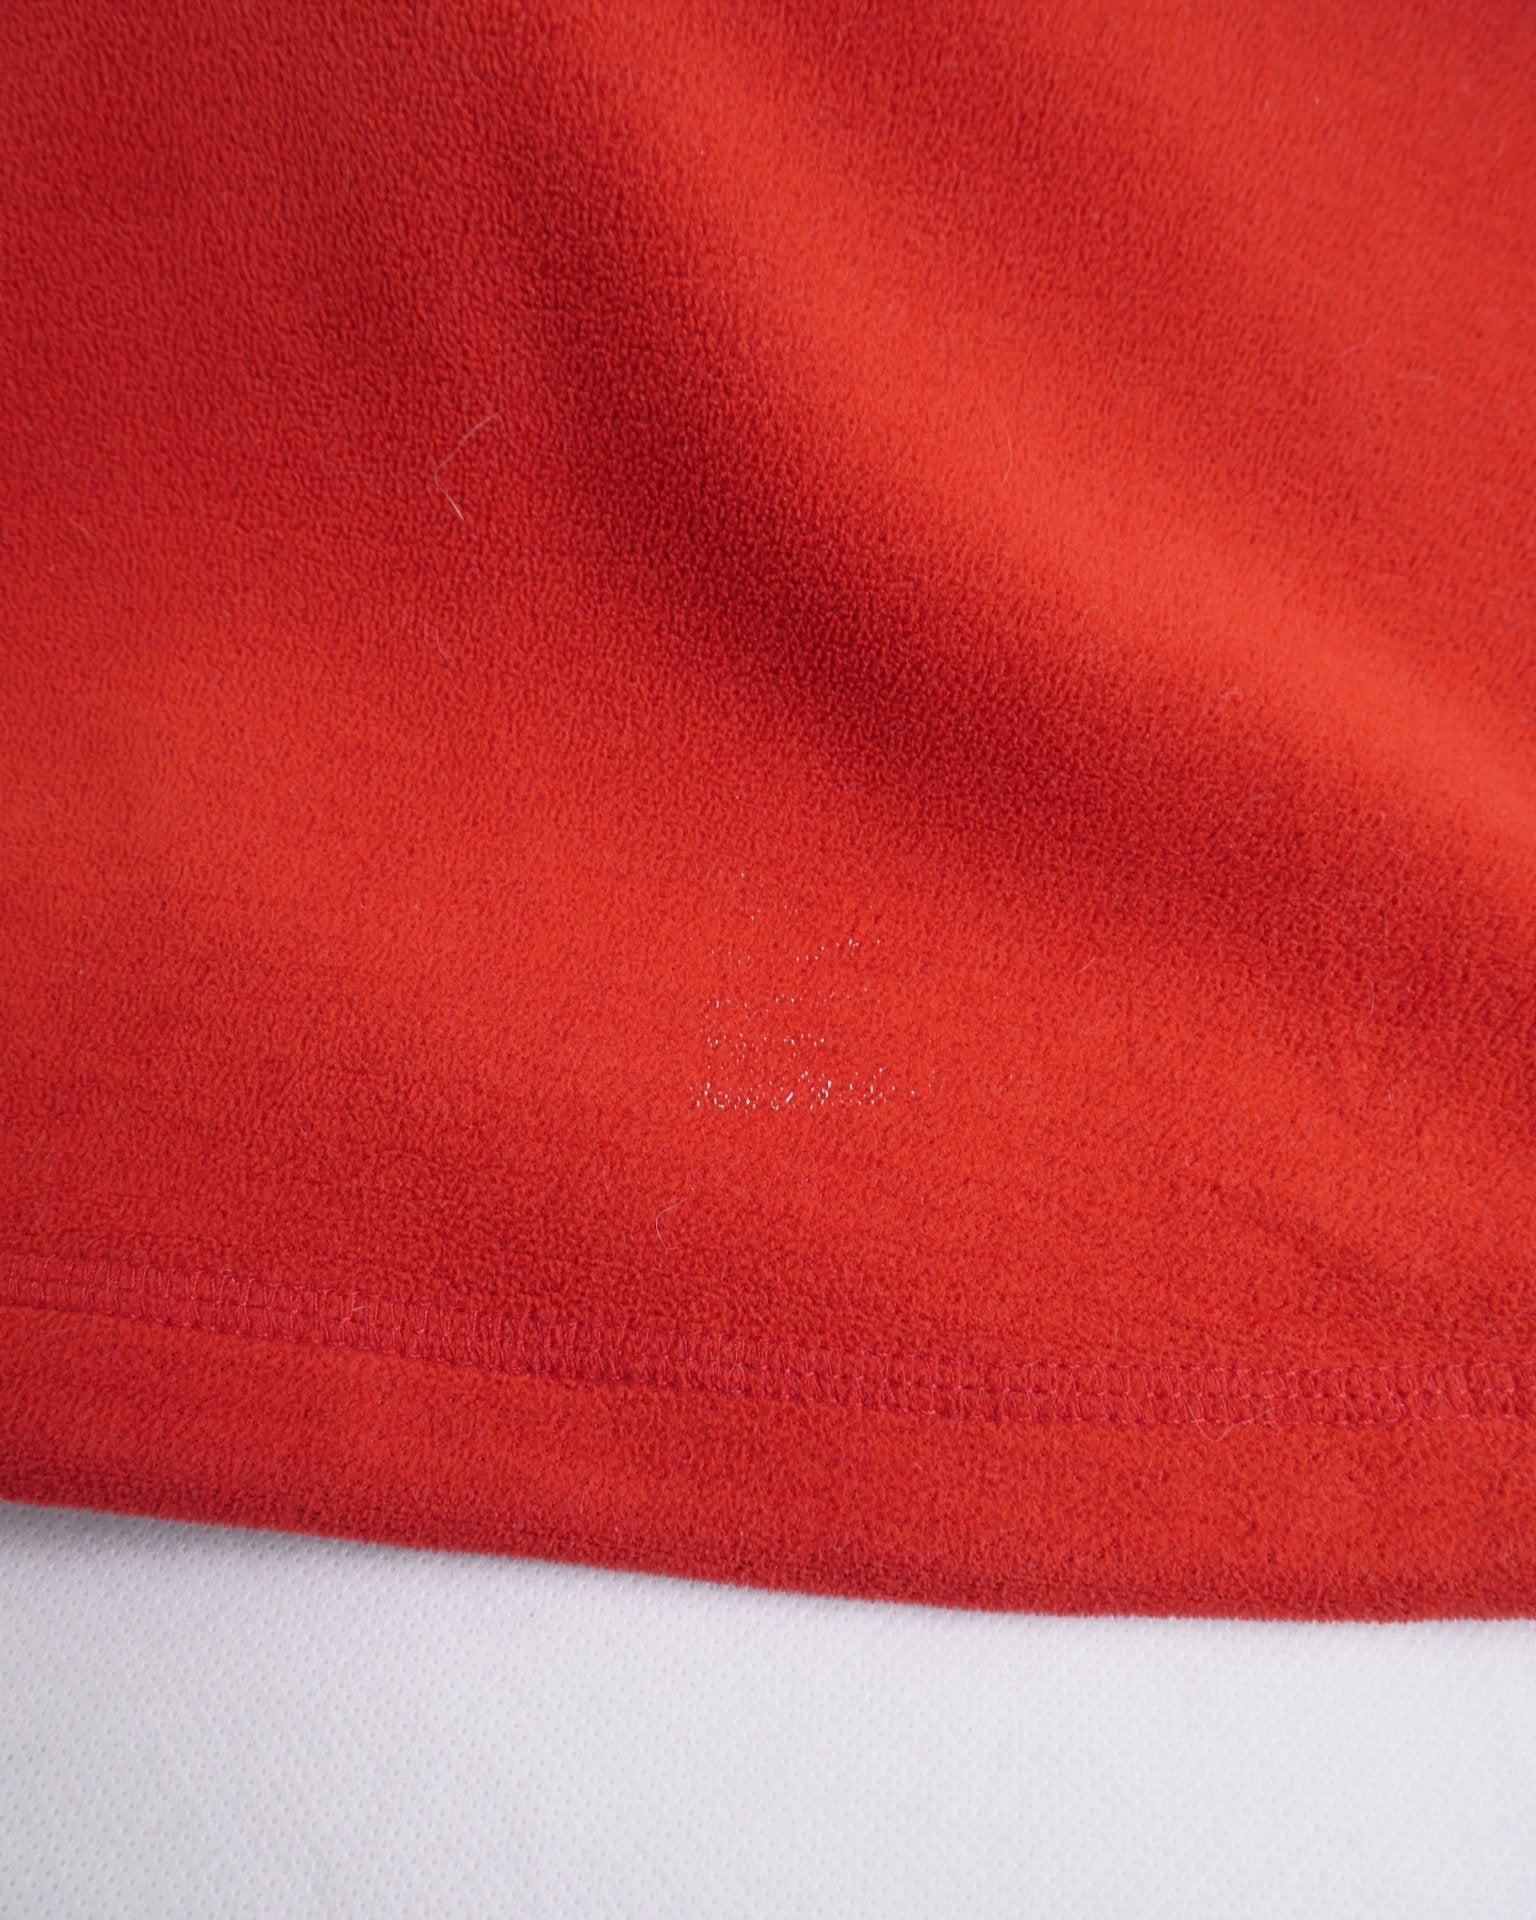 LL Bean embroidered Logo red Fleece Zip Sweater - Peeces